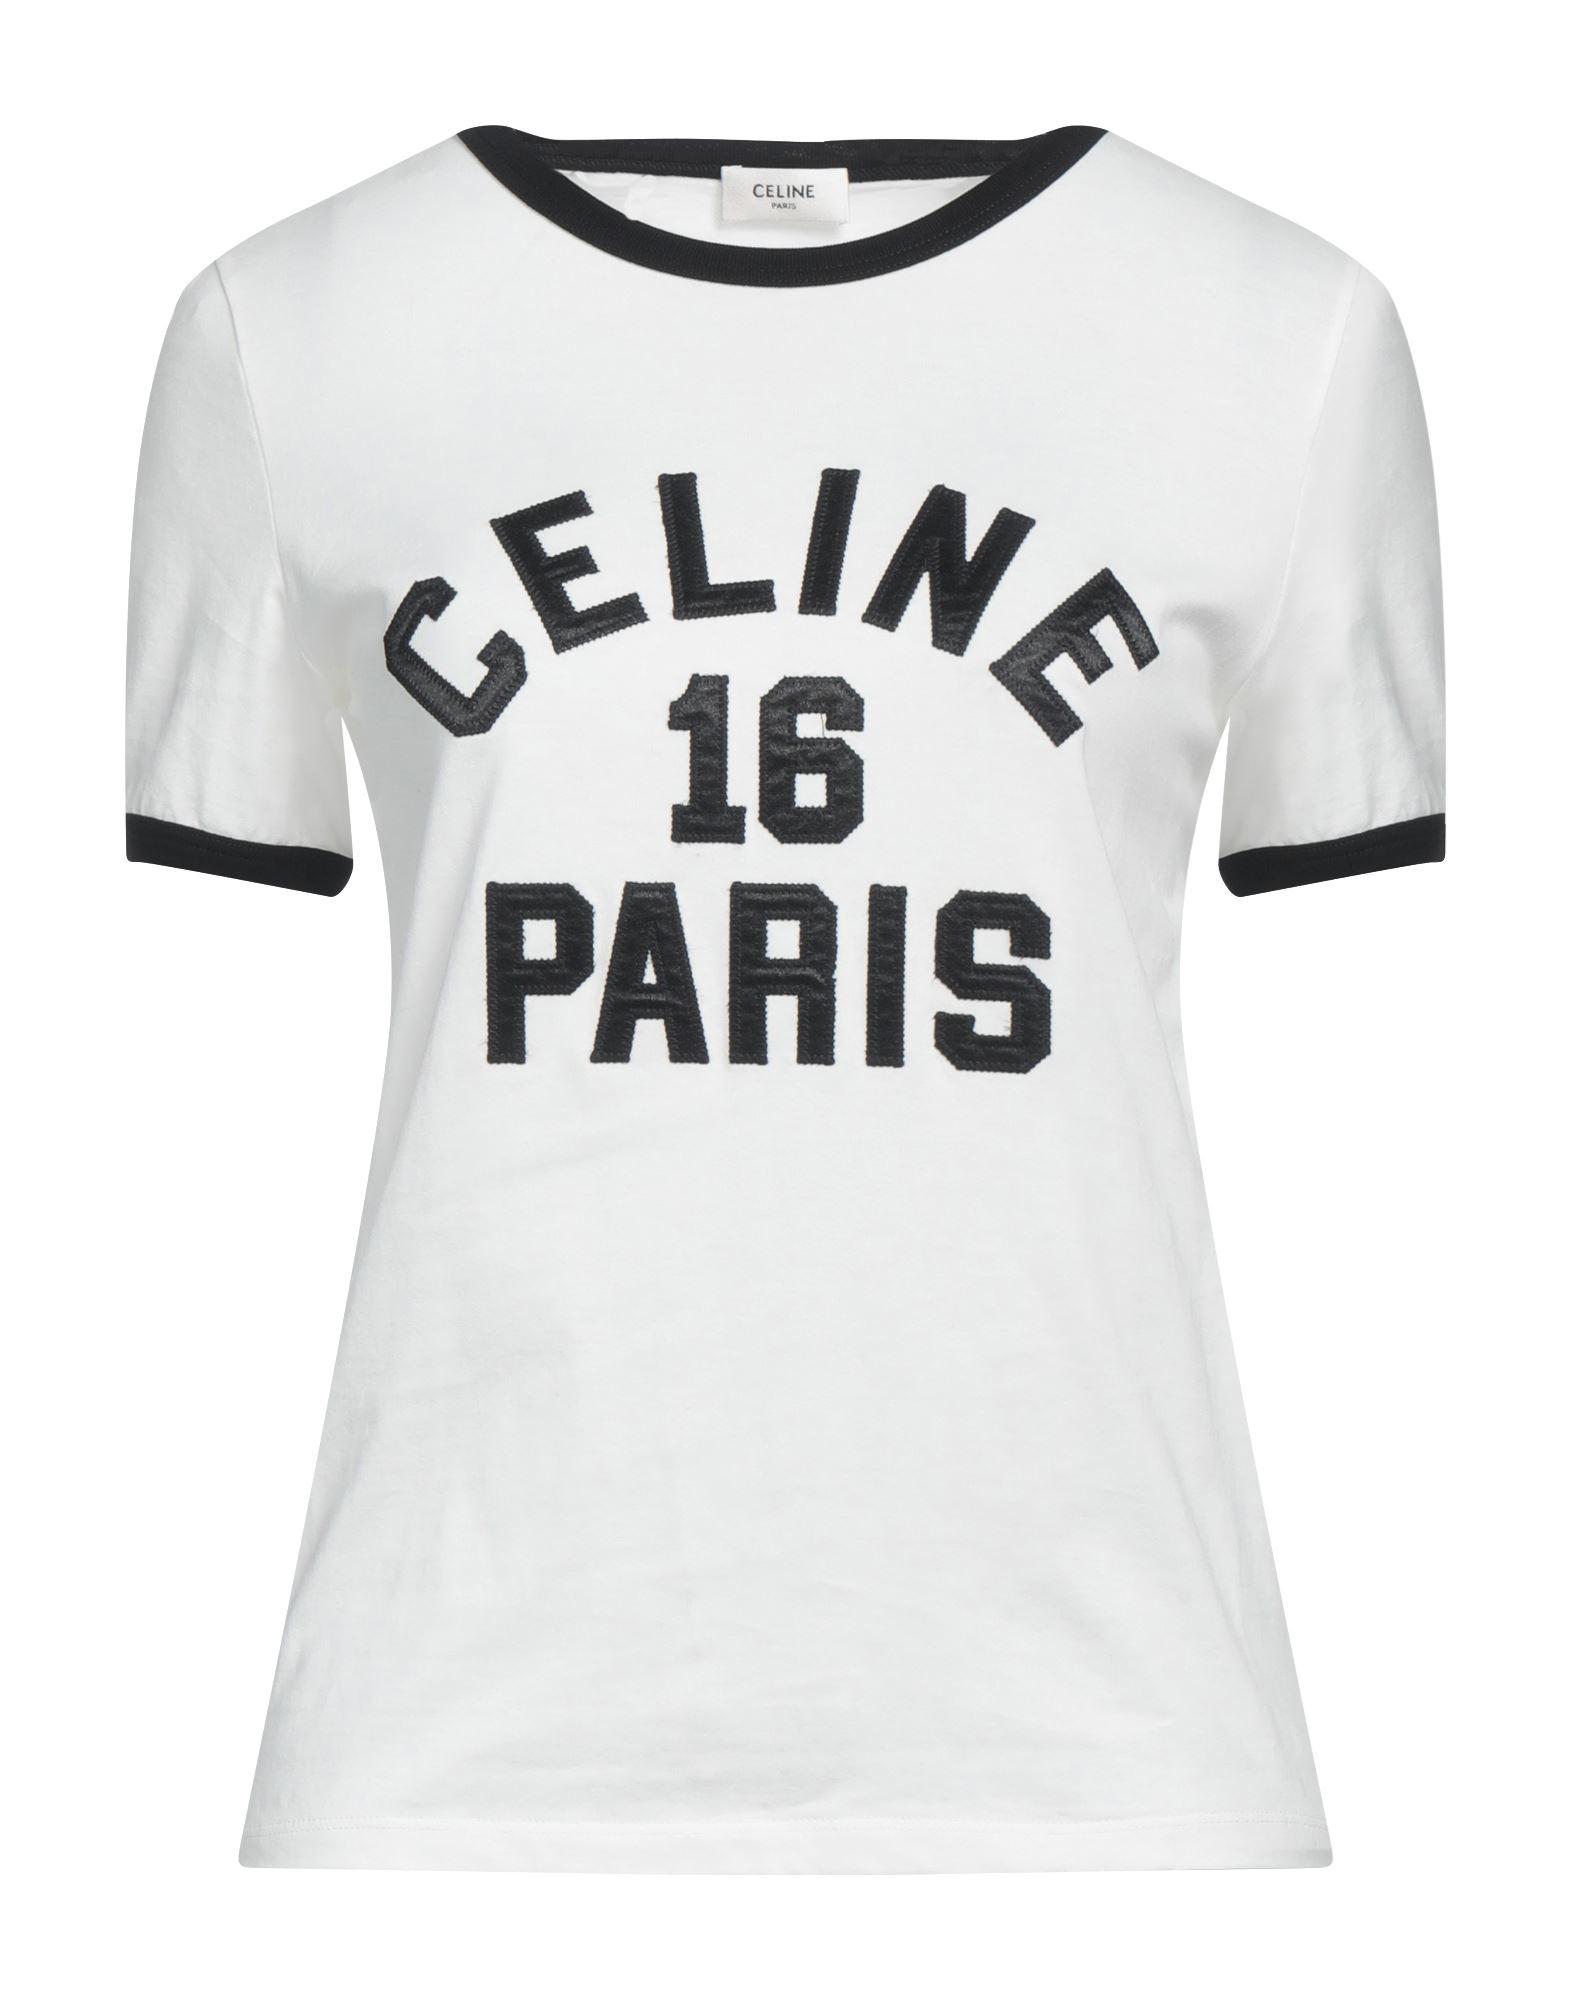 T-shirt Celine White size XS International in Cotton - 36802679